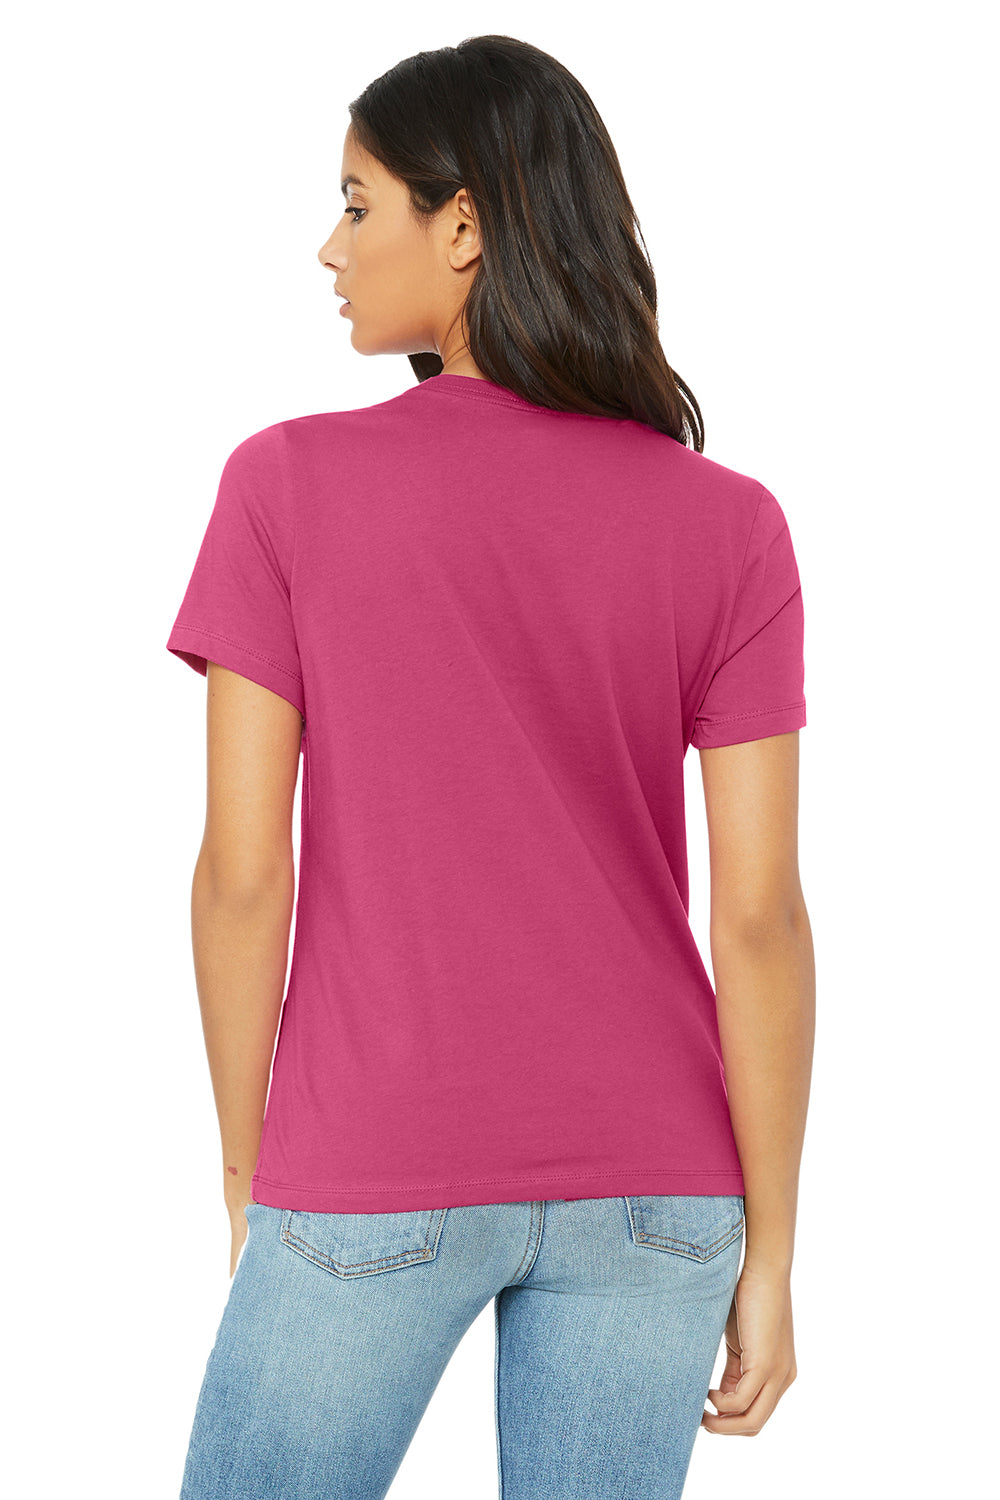 Bella + Canvas BC6400/B6400/6400 Womens Relaxed Jersey Short Sleeve Crewneck T-Shirt Berry Pink Model Back